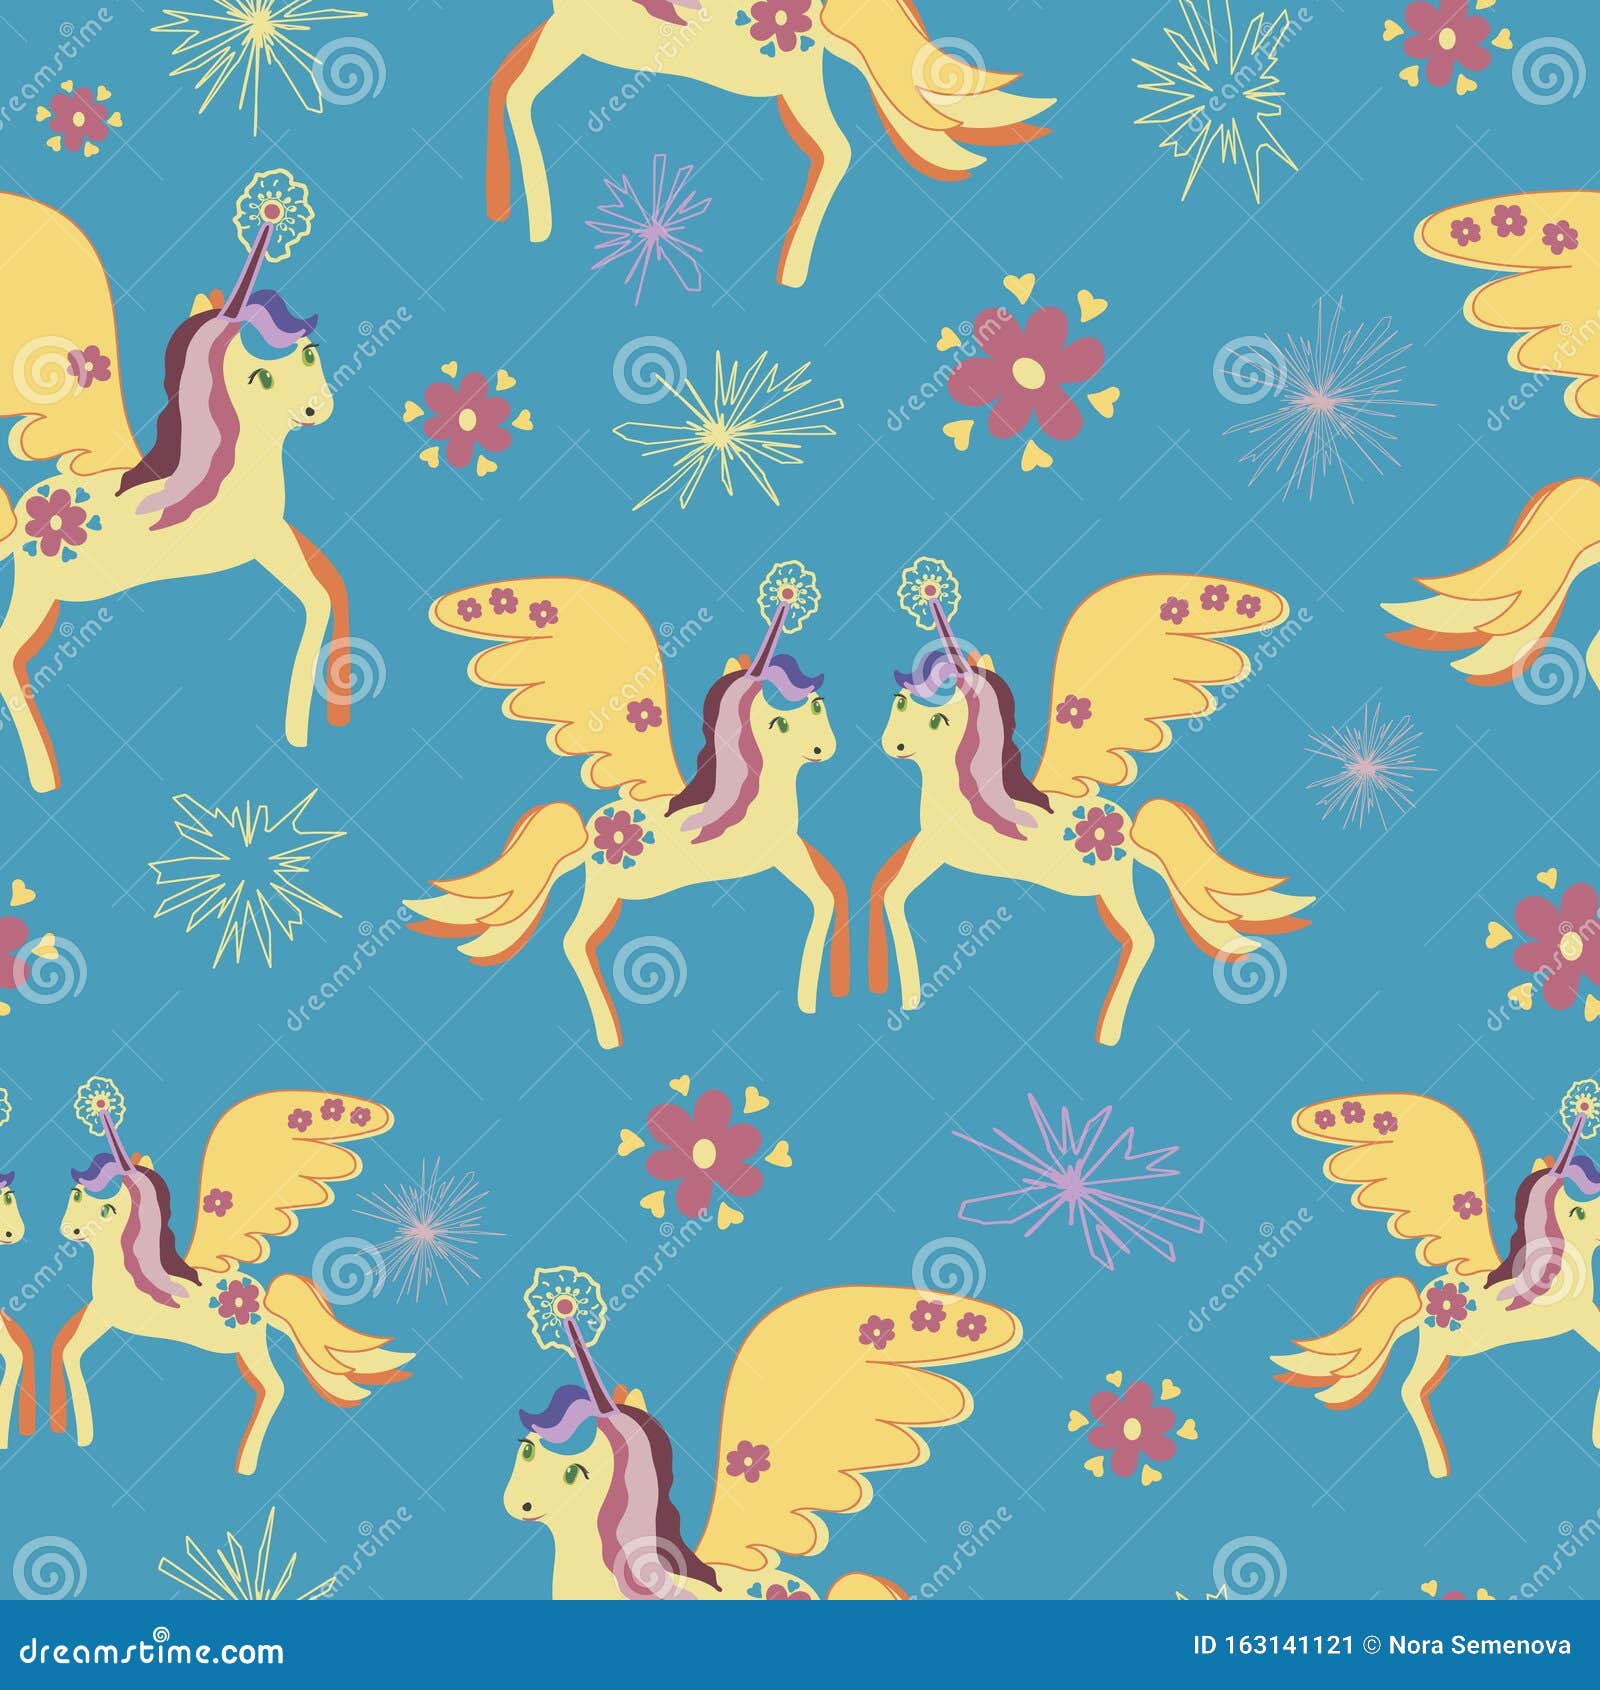 https://thumbs.dreamstime.com/z/cute-colorful-magic-unicorn-seamless-poster-greeting-card-fabric-wallpaper-t-shirt-miracle-colorful-unicorn-seamless-cute-colorful-163141121.jpg